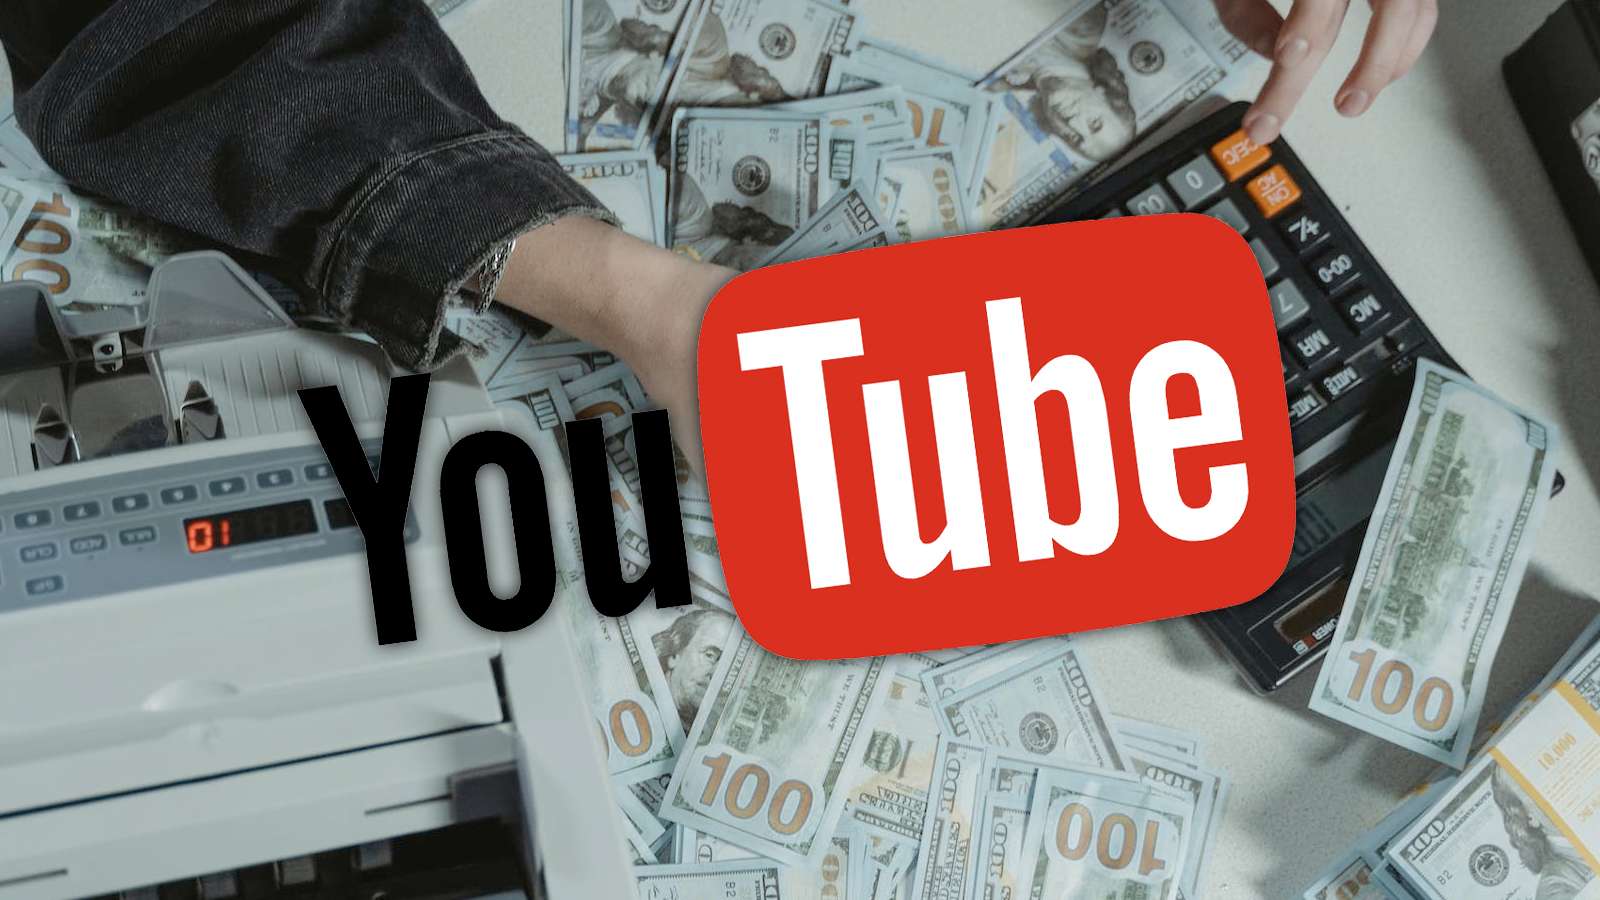 YouTube scam